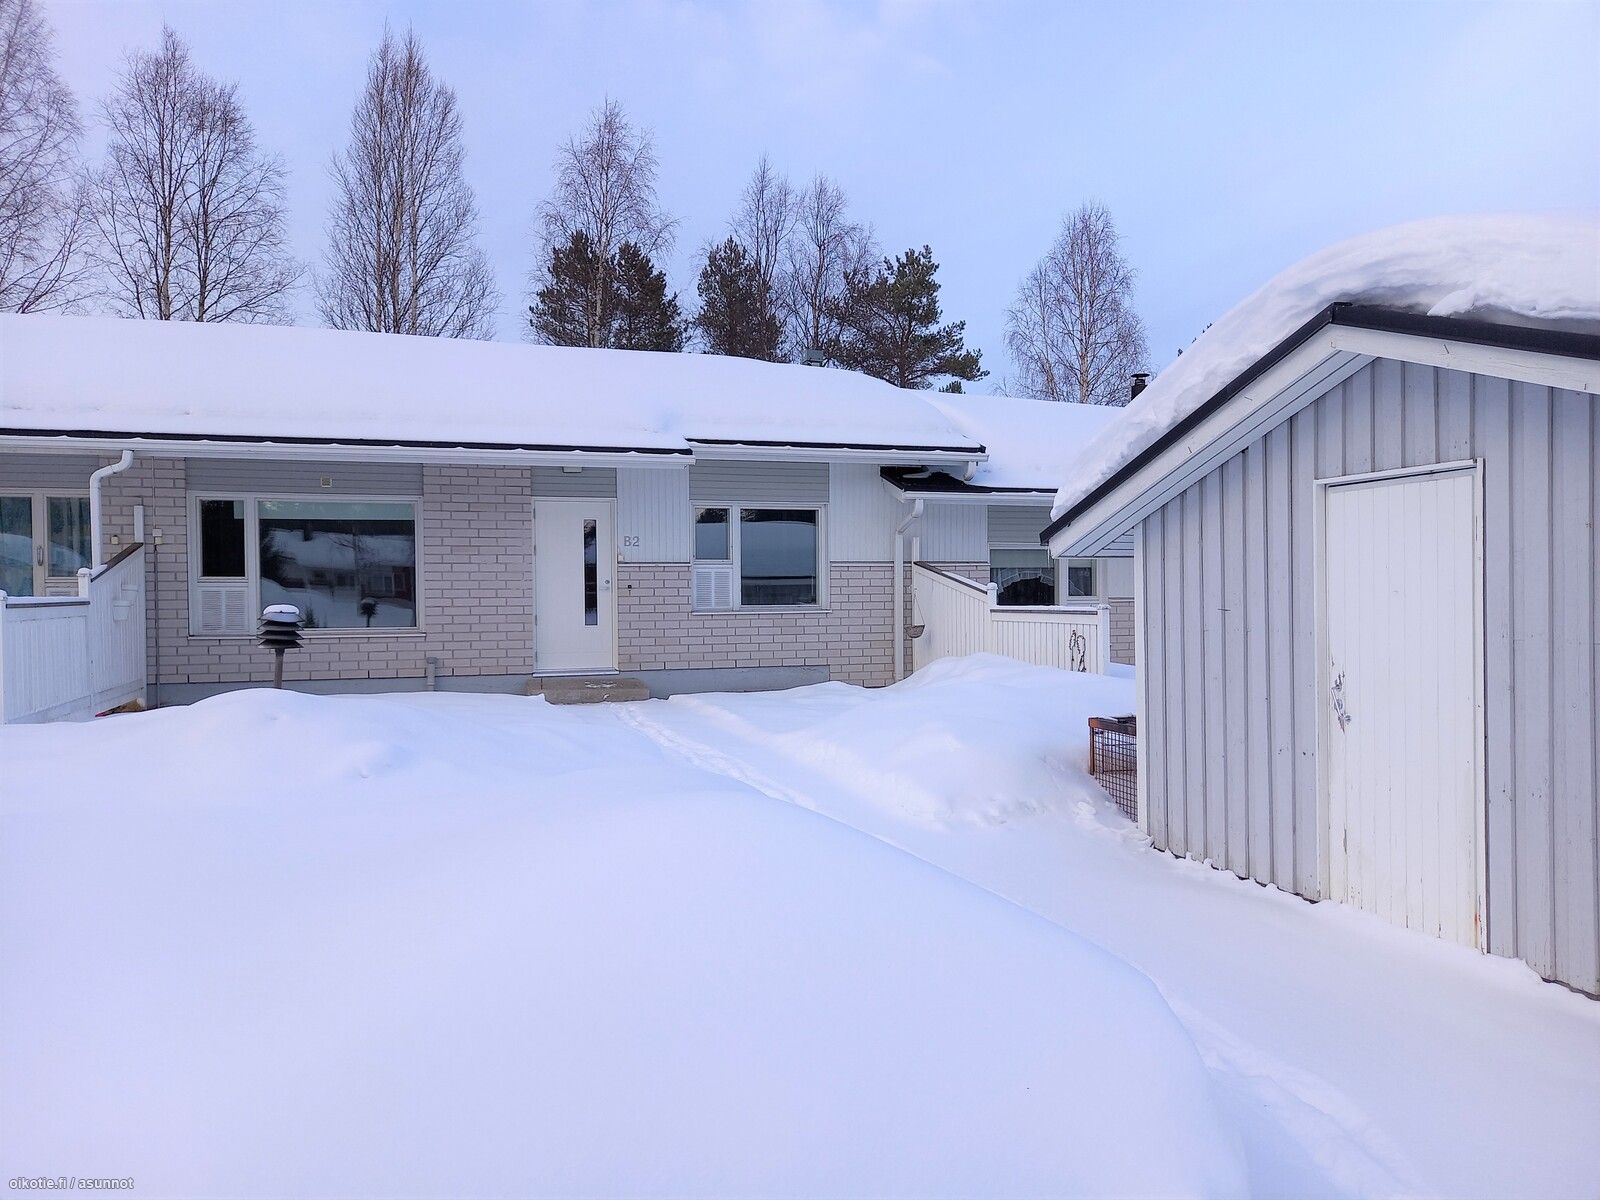 68 m² Revonkierros 1 B, 91200 Oulu 3h+k – Oikotie 17224275 – SKVL